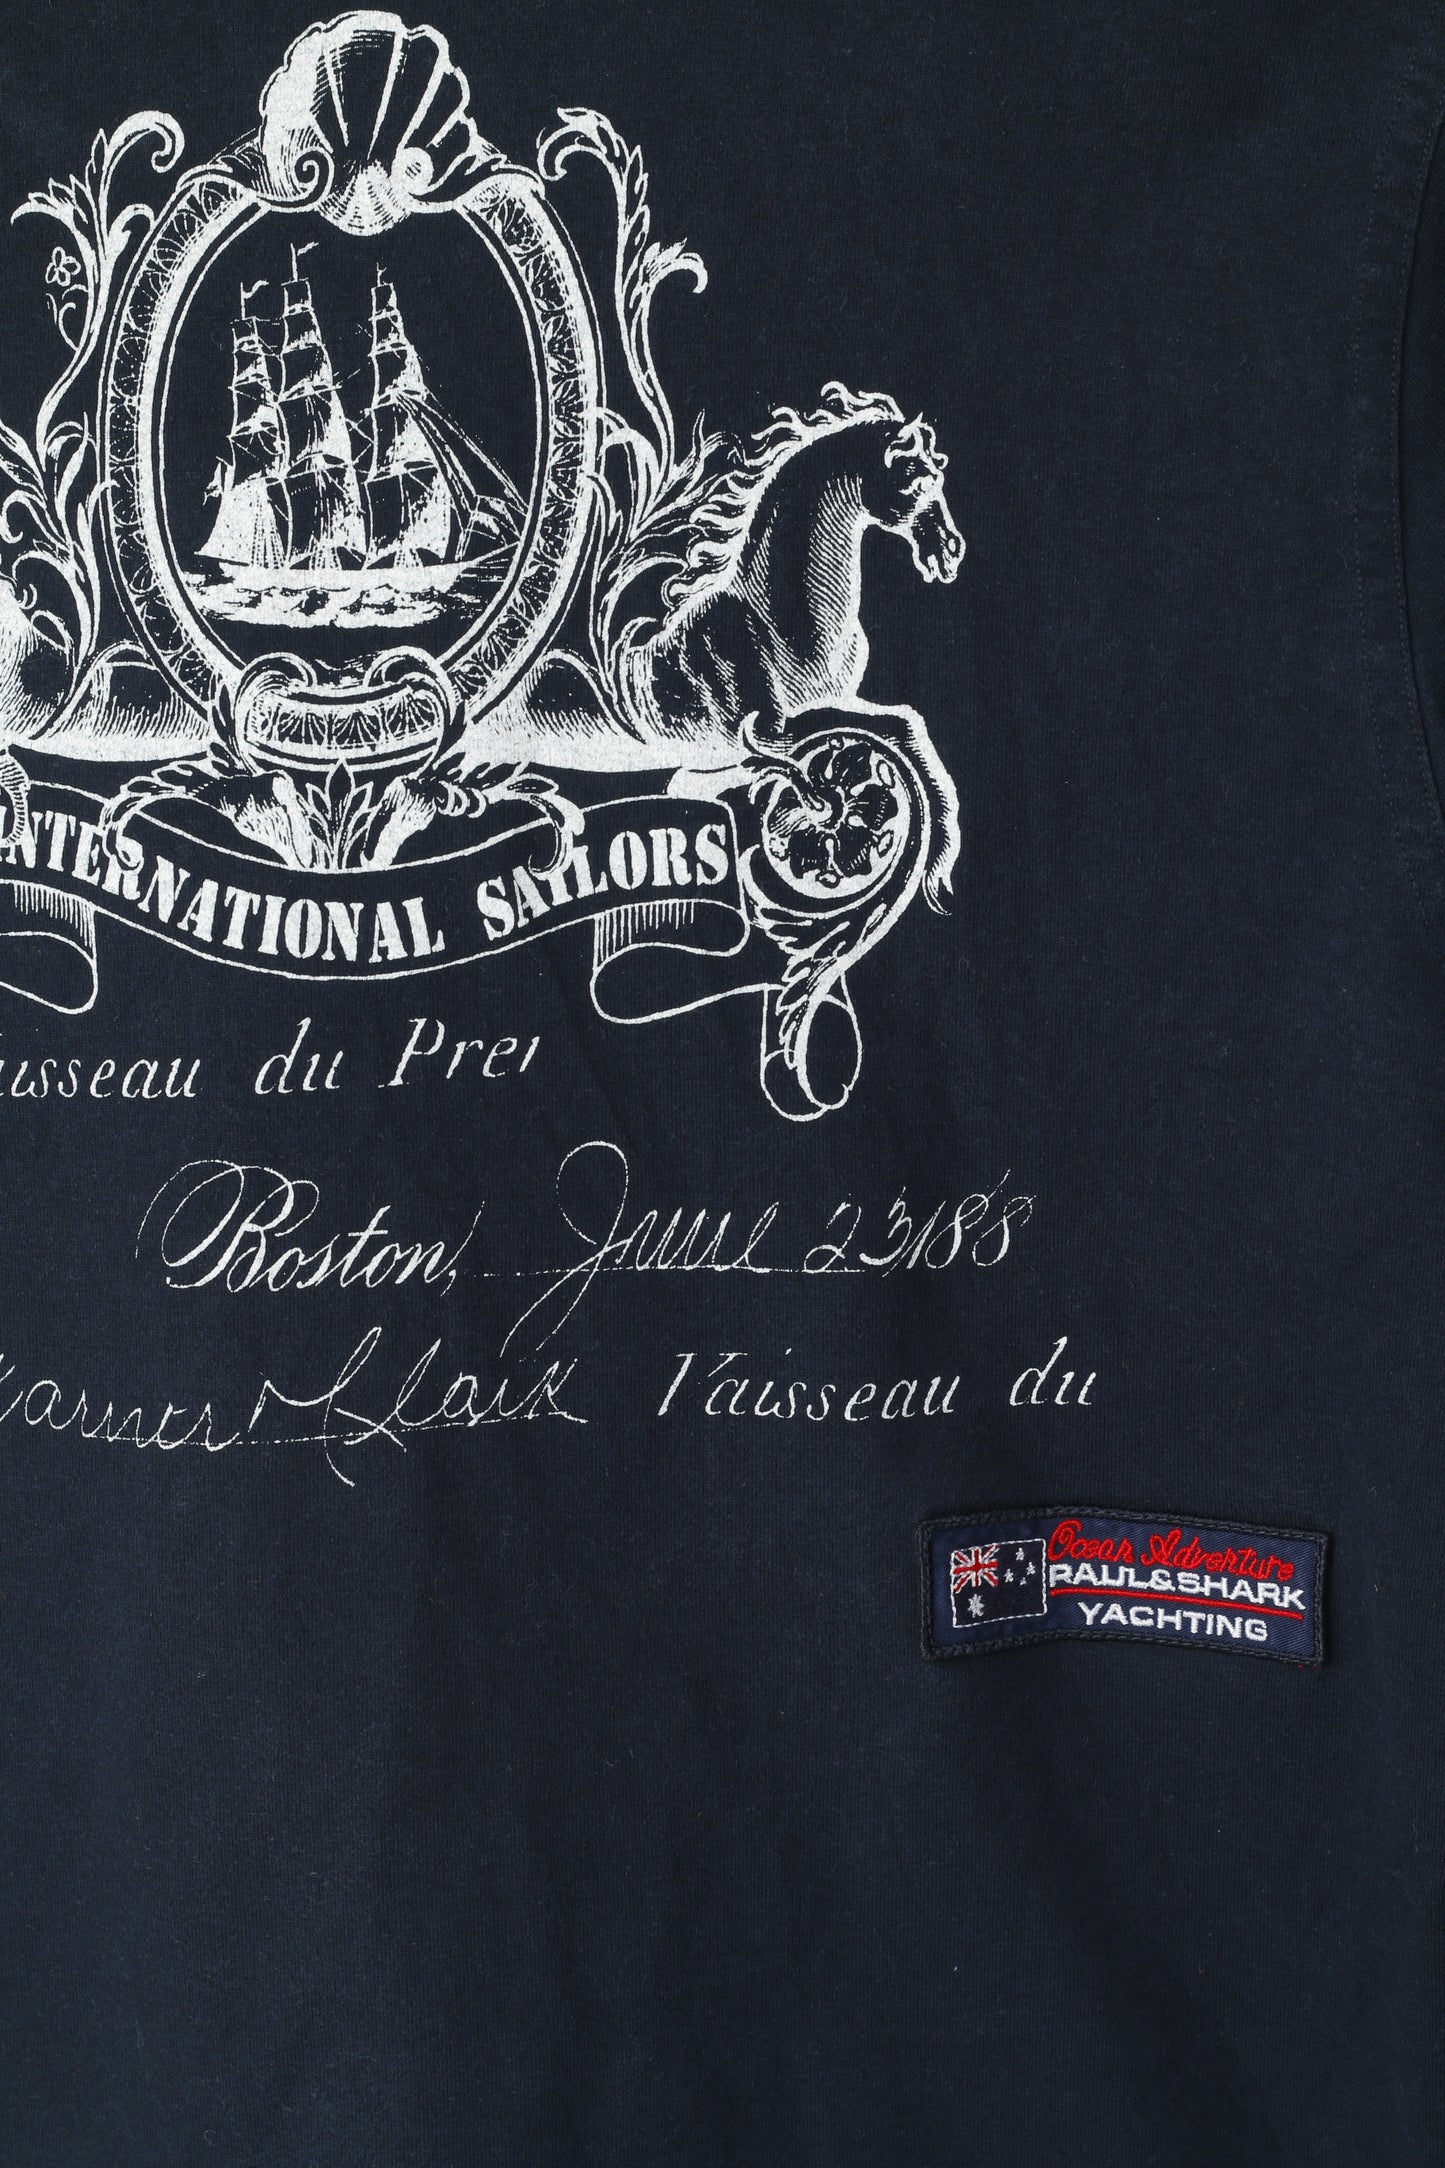 Paul & Shark Men S Polo Shirt Navy Cotton Challenge Race Long Sleeve Top